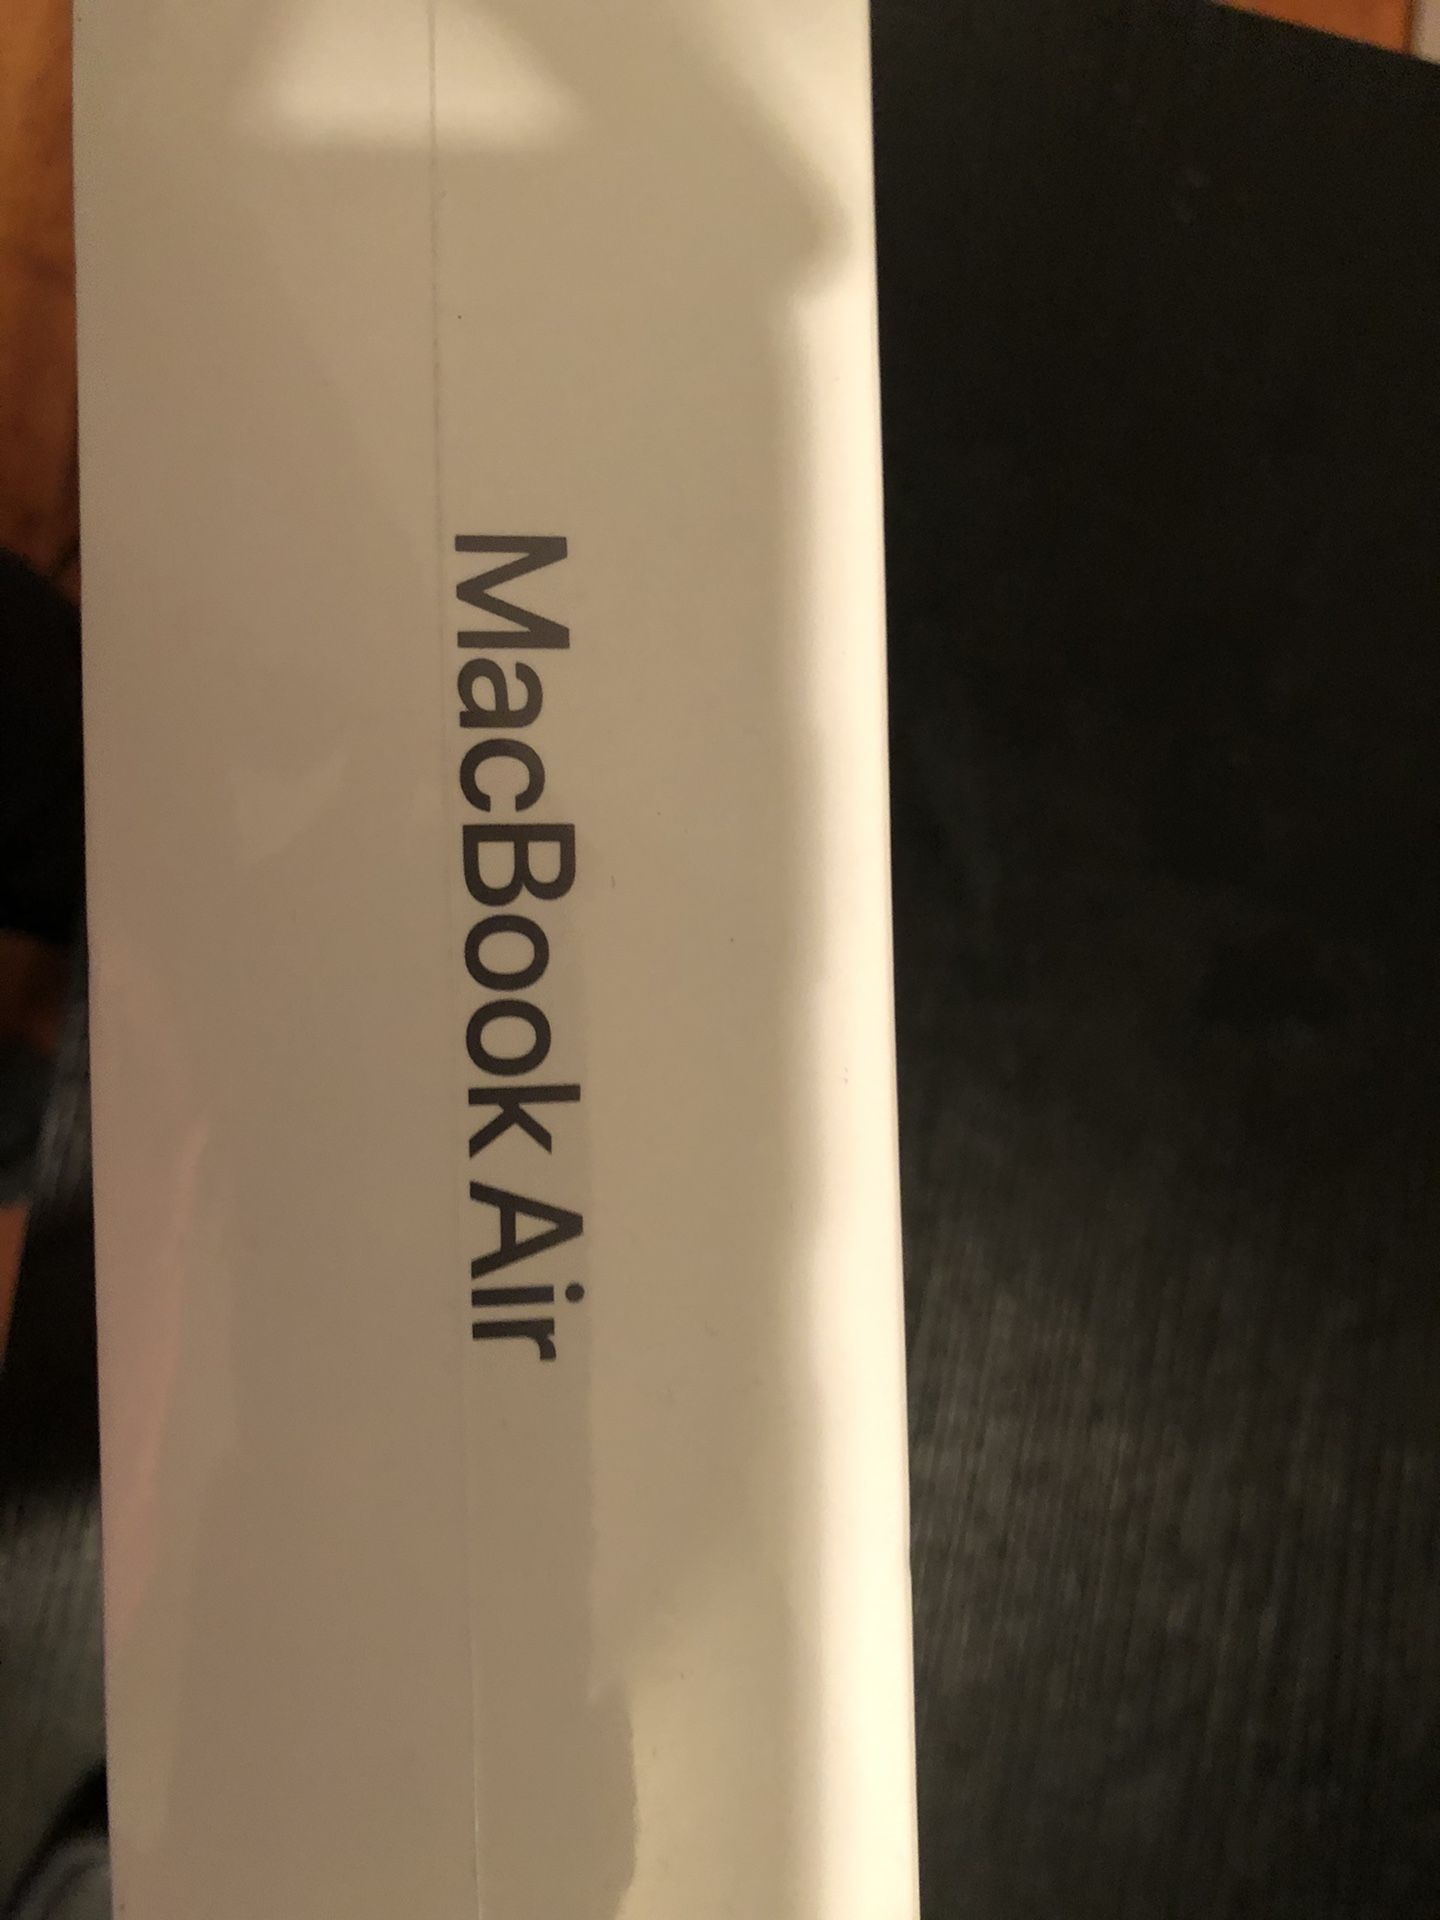 Macbook air 2020 m1 chip